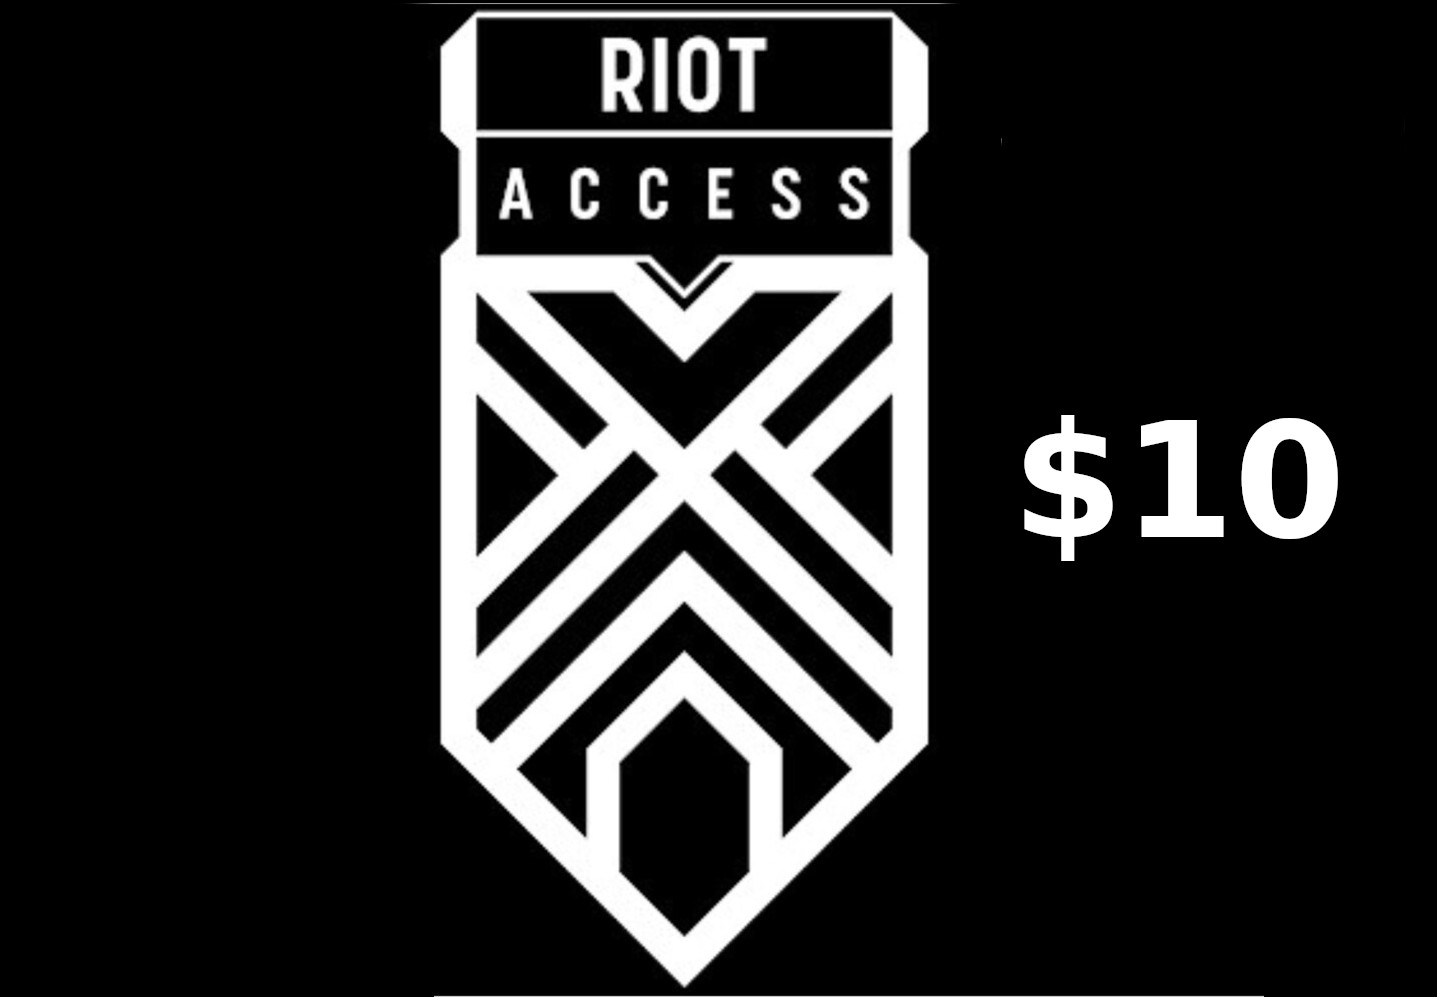 Riot Access $10 Code US